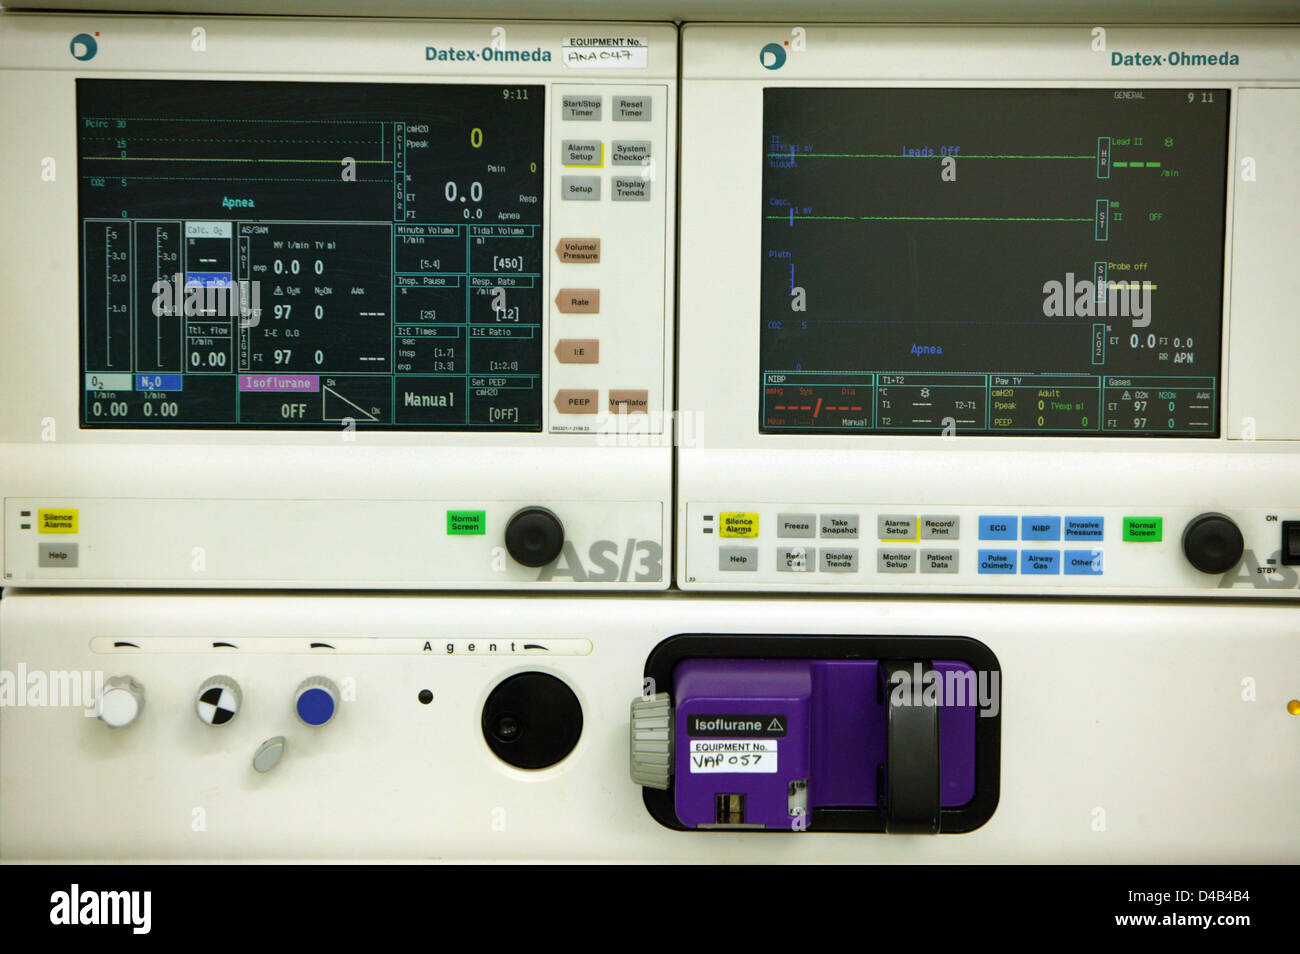 Ventilator monitor in intensive care unit. UK Stock Photo - Alamy